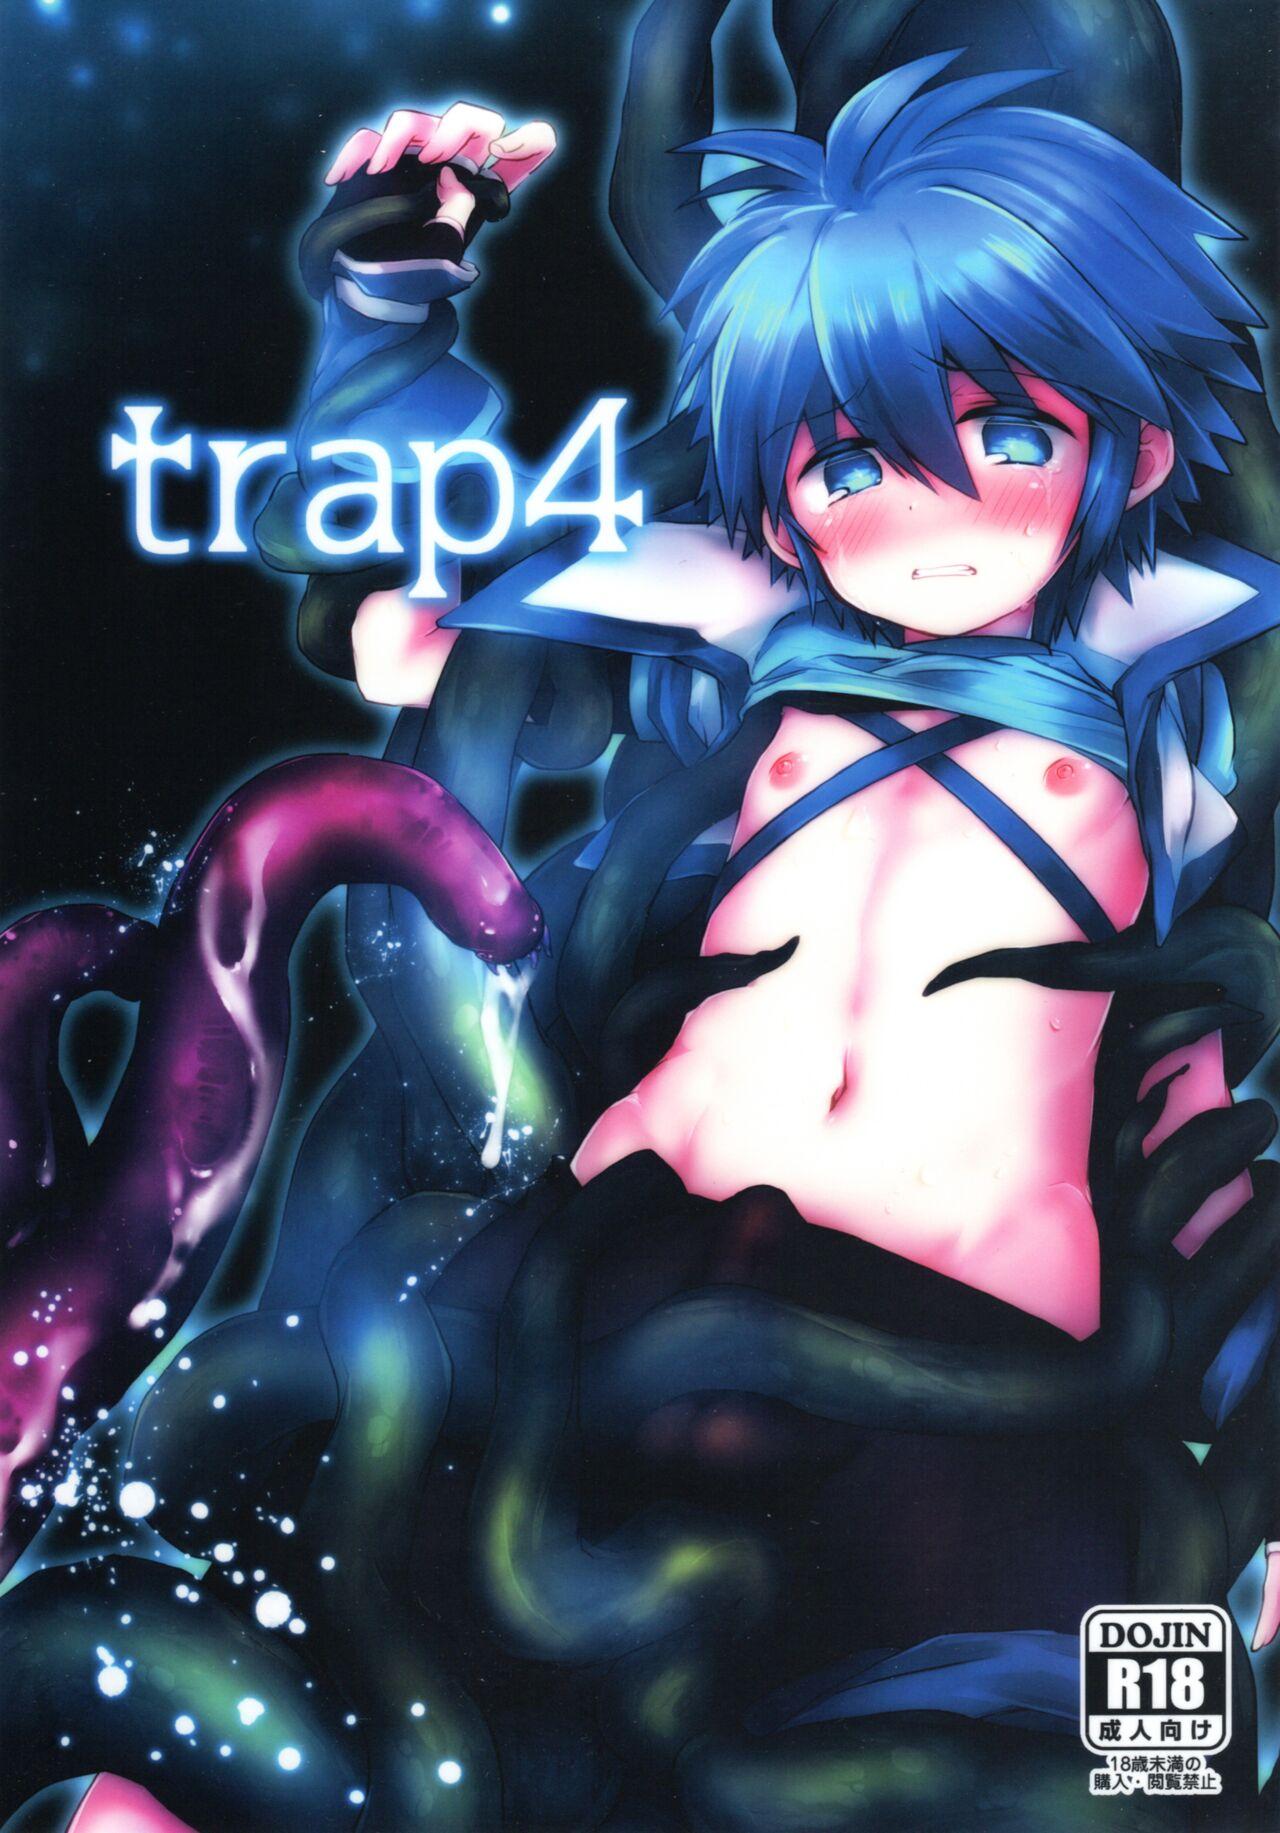 Asian trap 4 - Tartaros Action - Picture 1